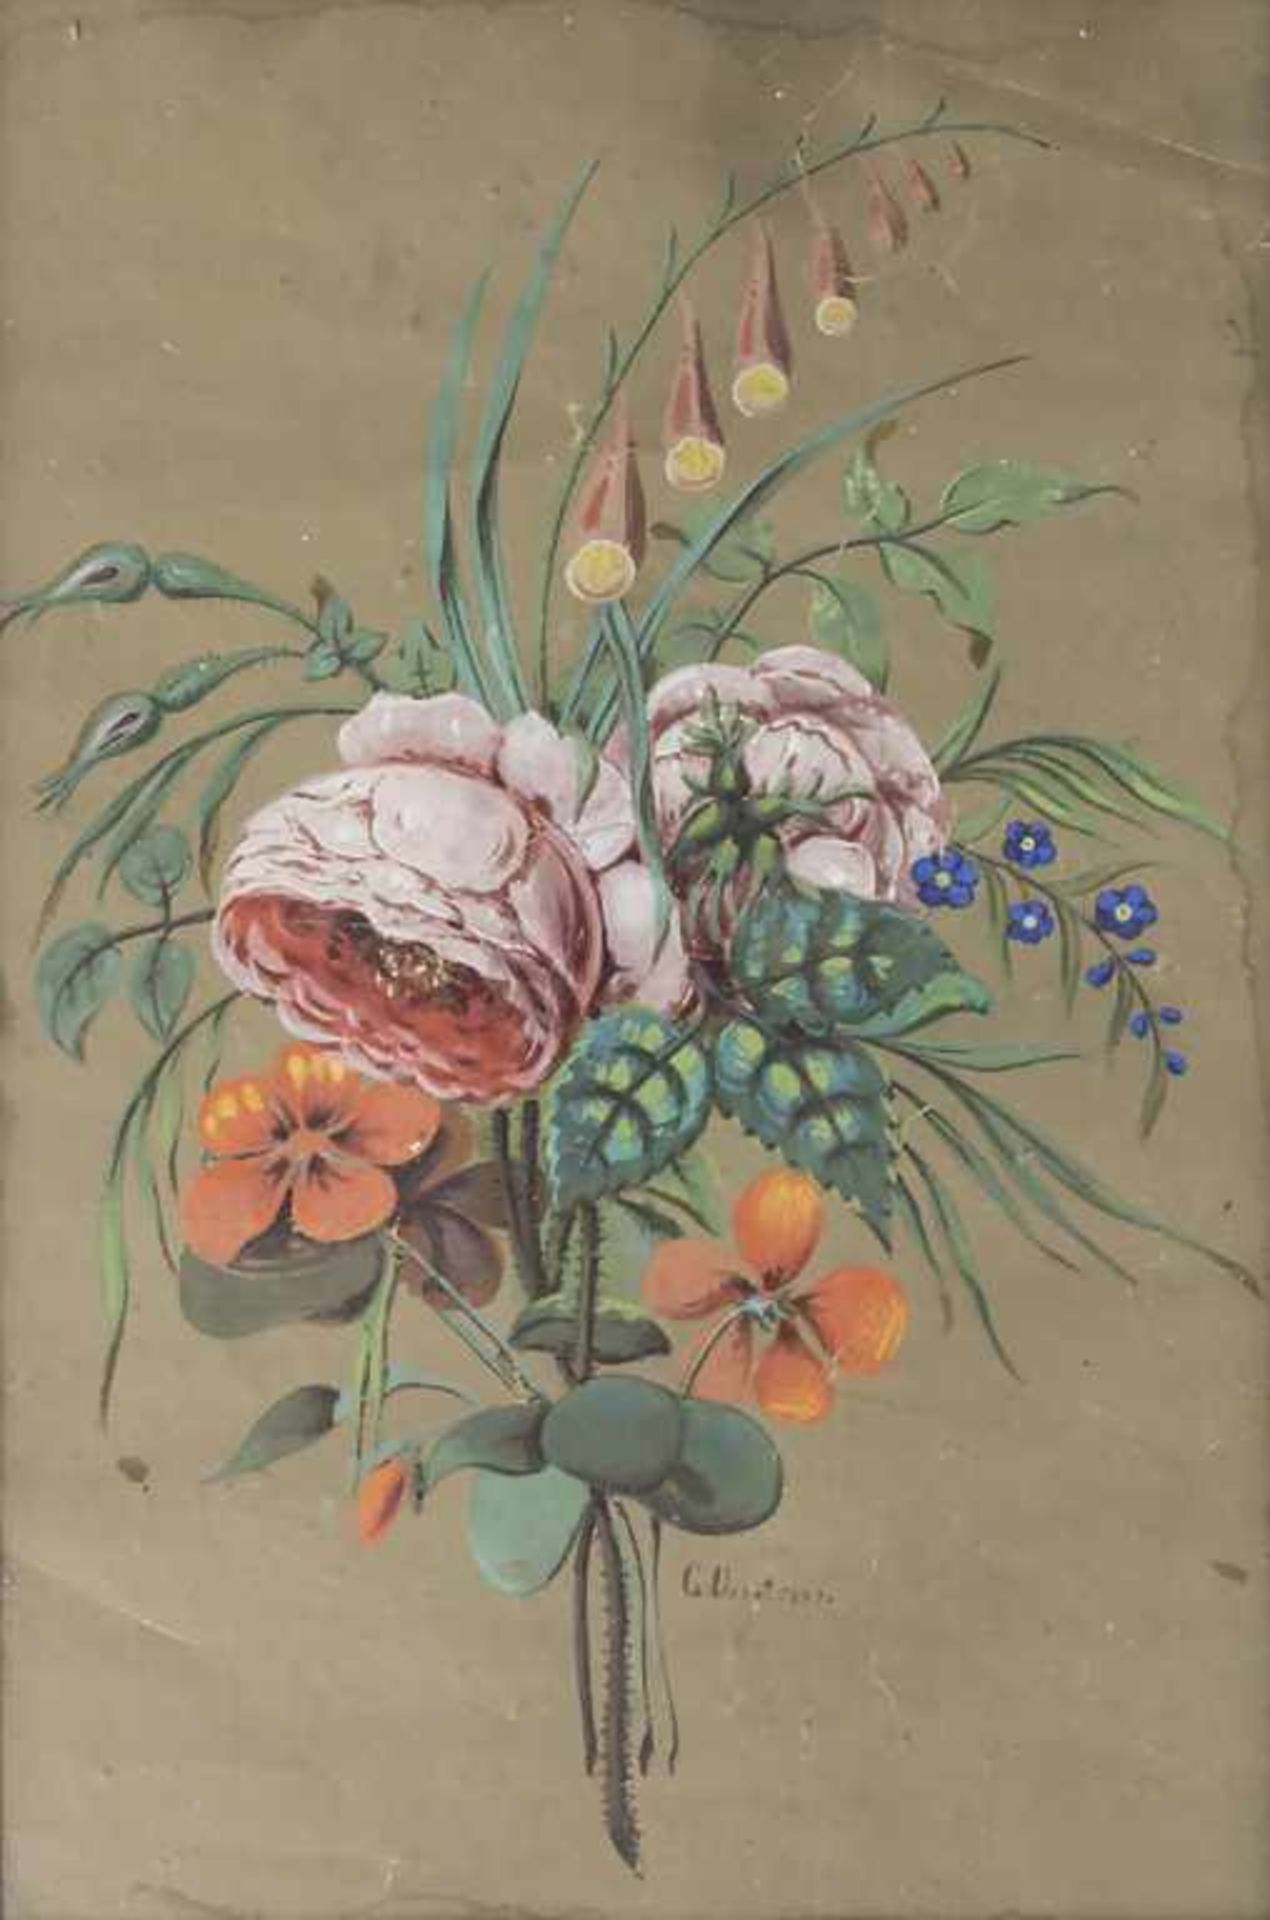 G. Uriot (tätig um 1857), 'Blumenstrauß' / 'A bouquet of flowers'